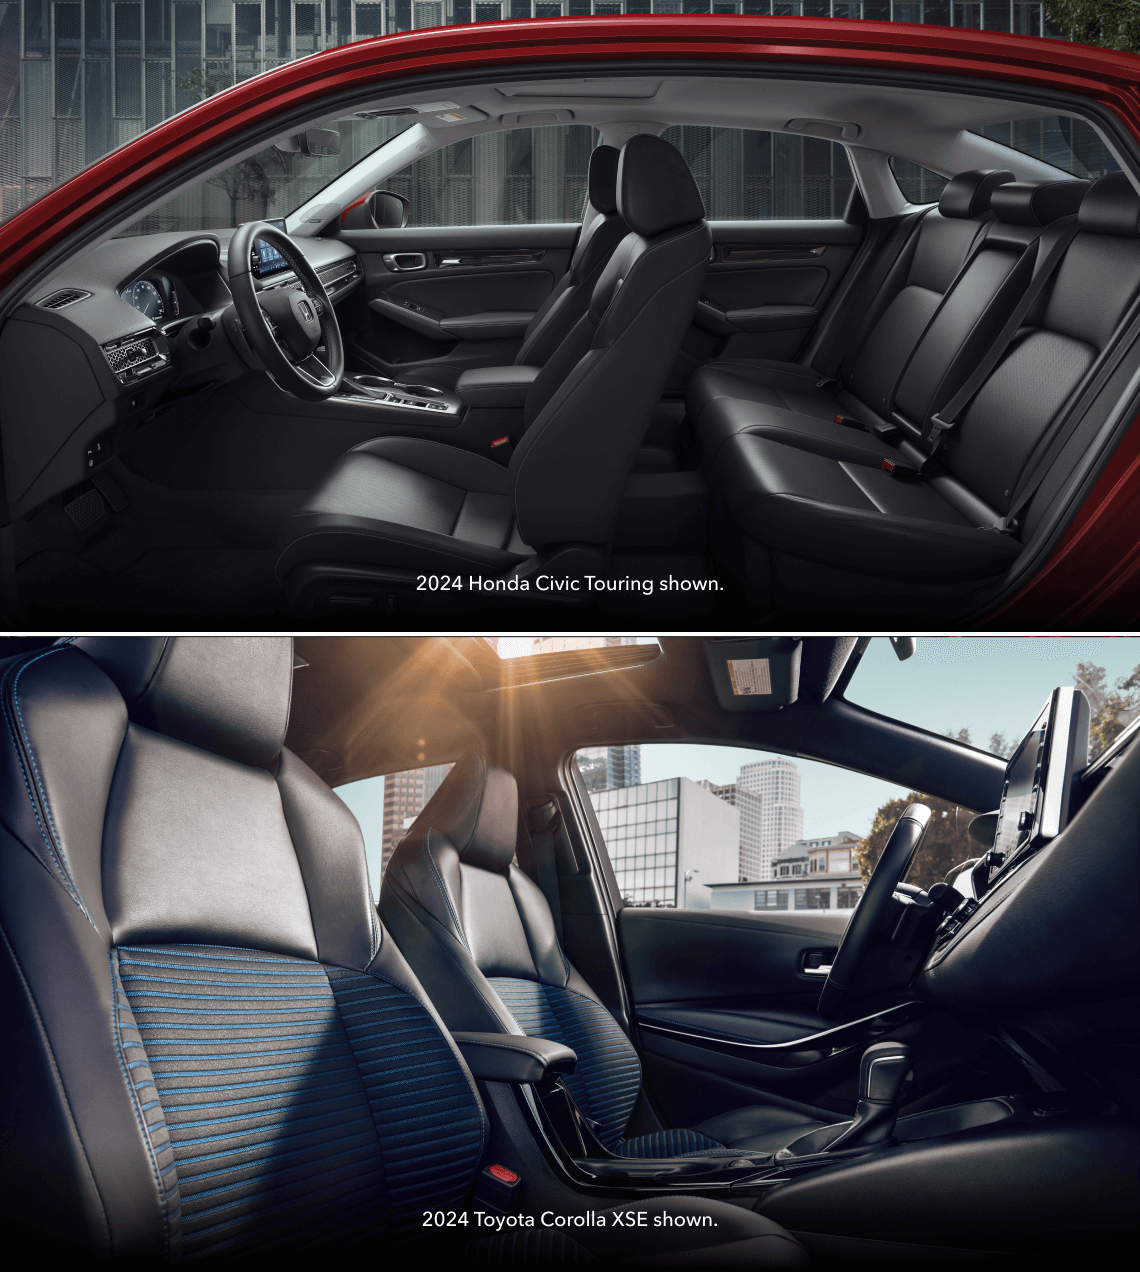 Honda Civic vs. Toyota Corolla Interior & Exterior Design